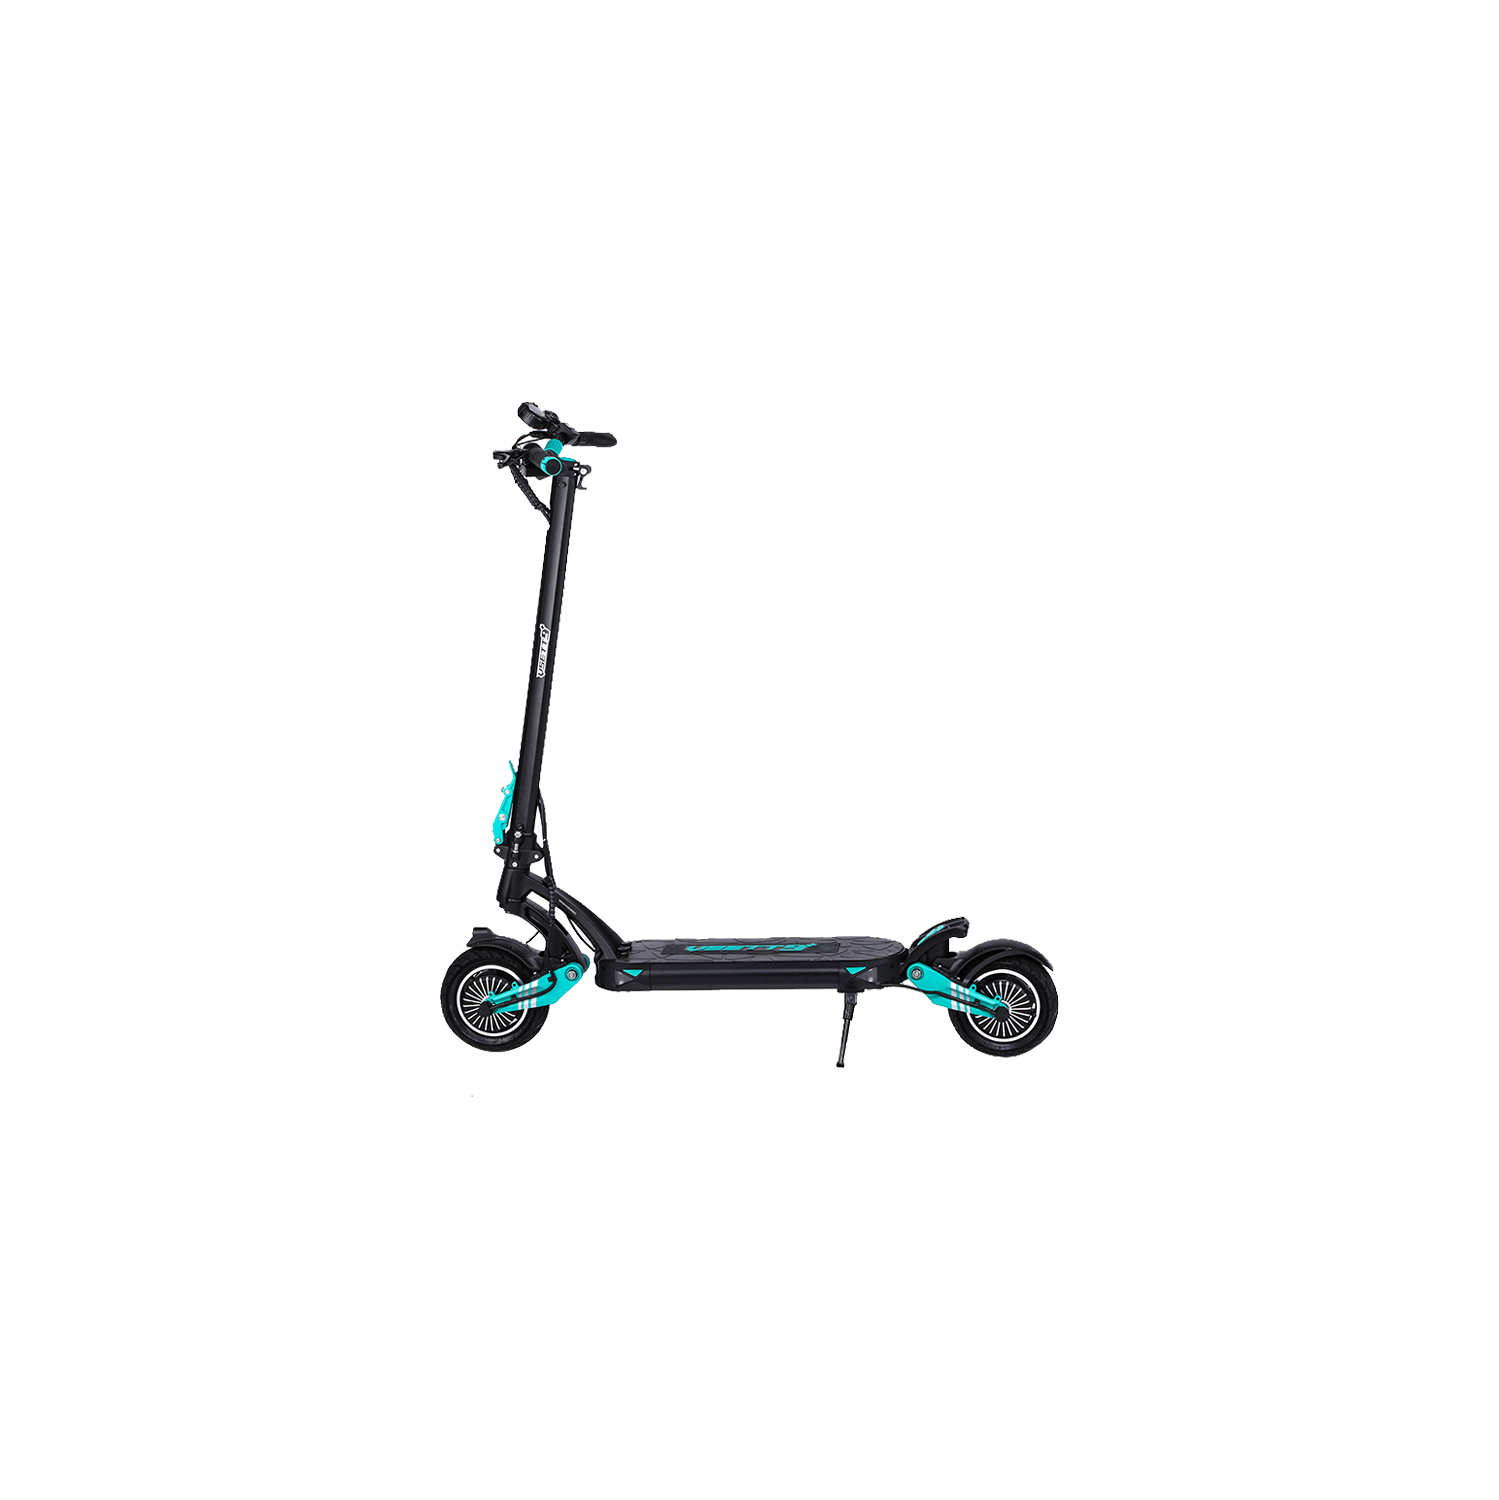 VSETT 9+ Electric Scooter (48V, 21Ah LG) | Dual Motor | Full Suspension | LCD Display | 55KM Range | 53KM/h Top Speed